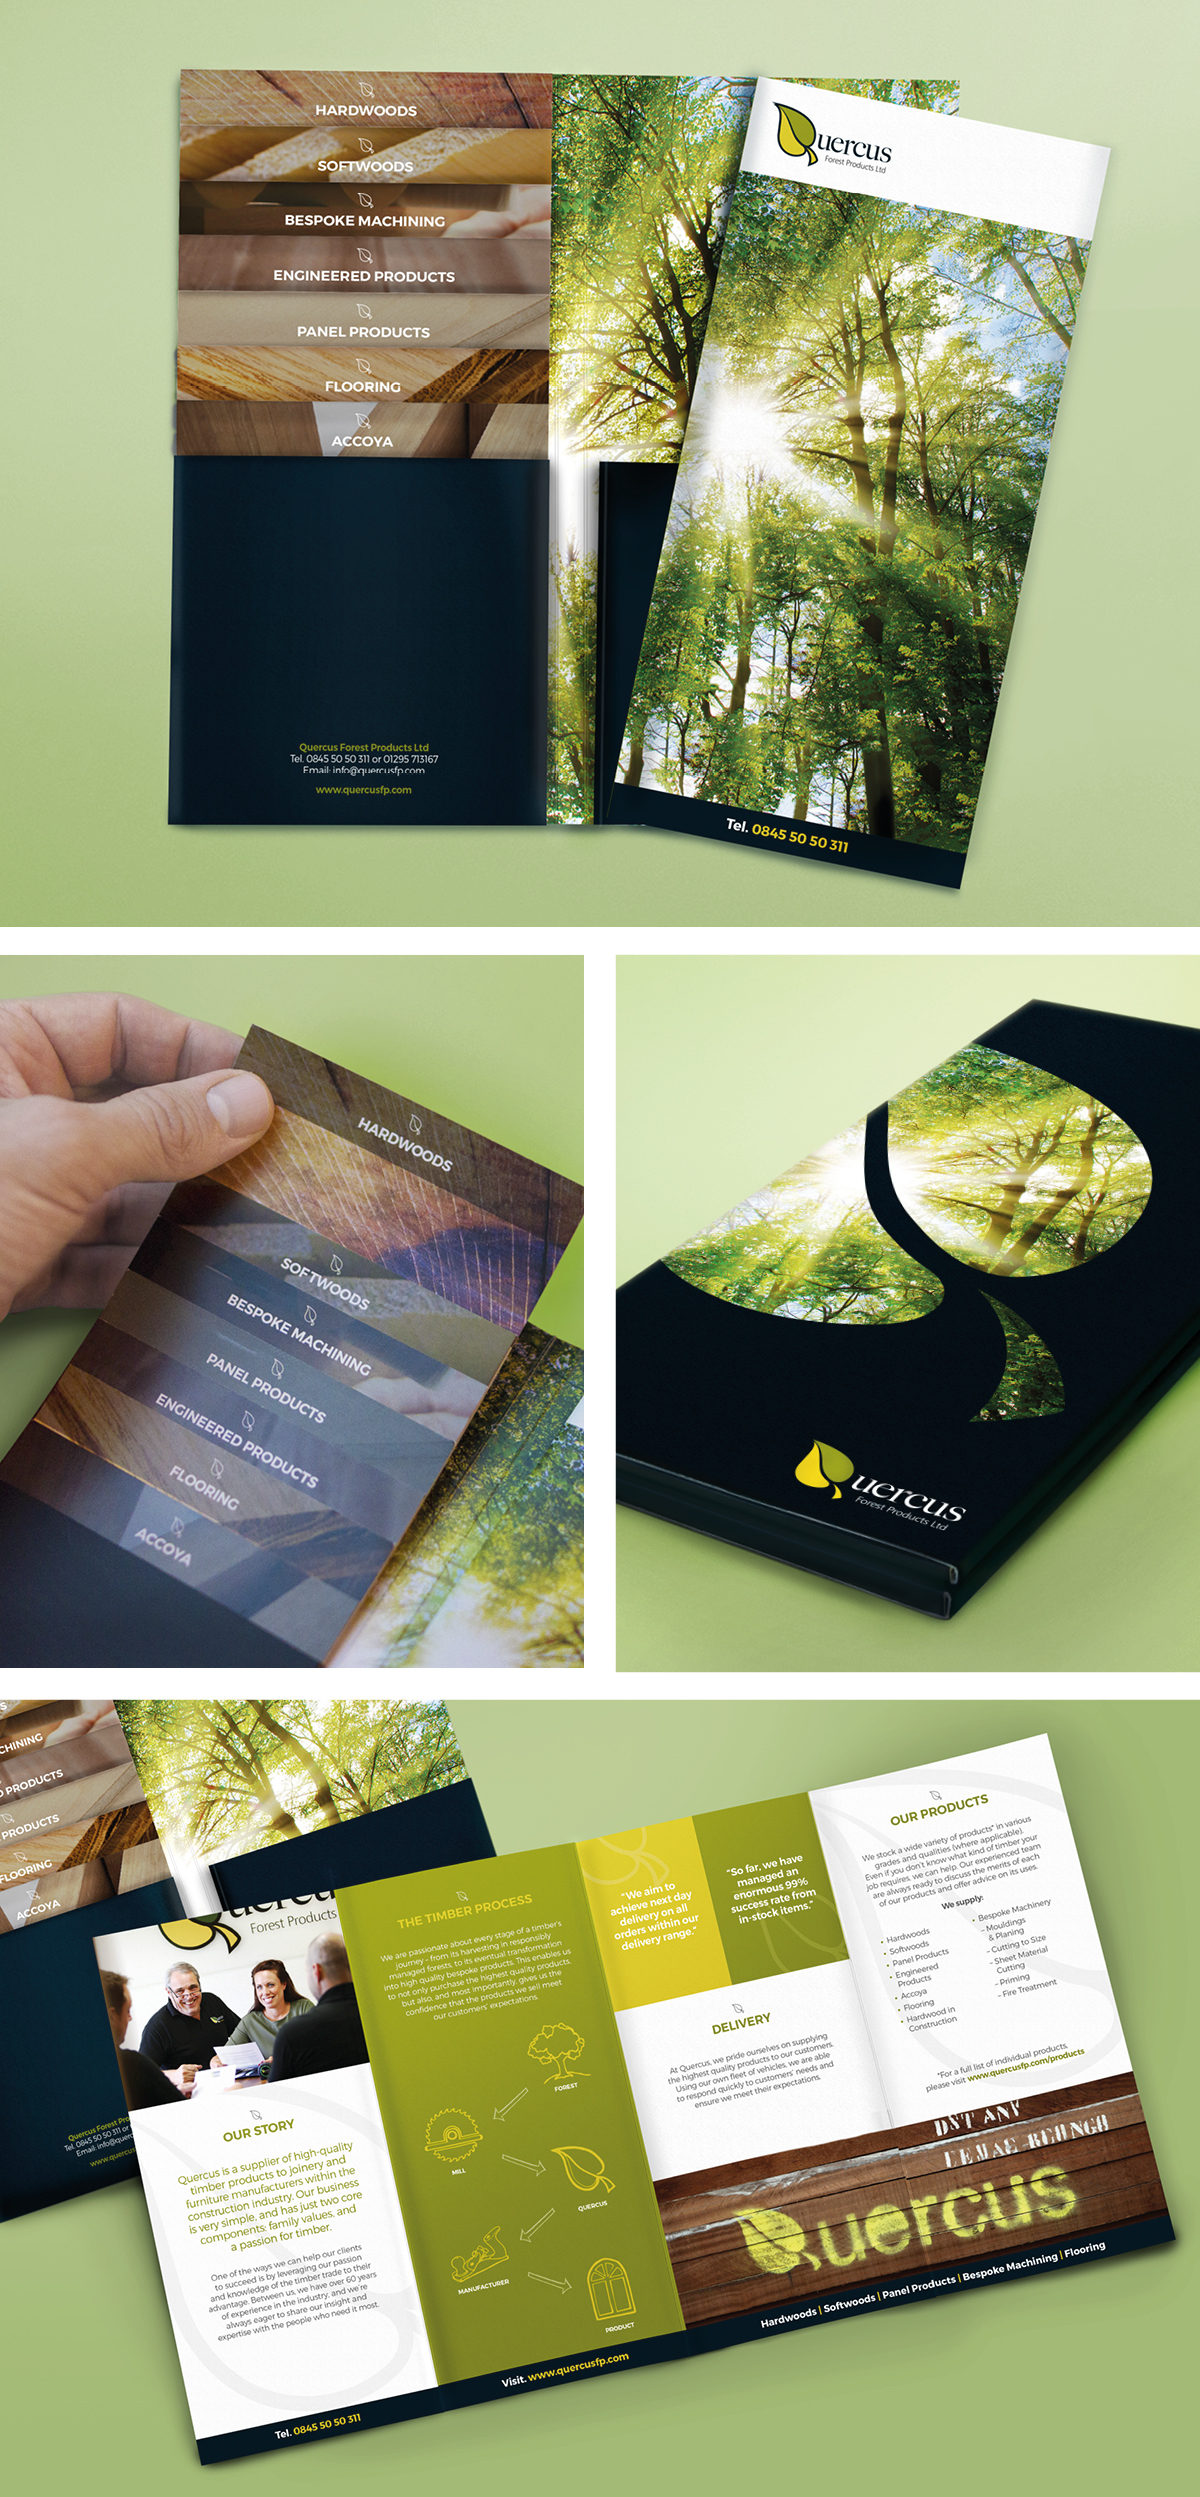 Quercus Forest Products leaflet inserts print design artwork Matt Powell